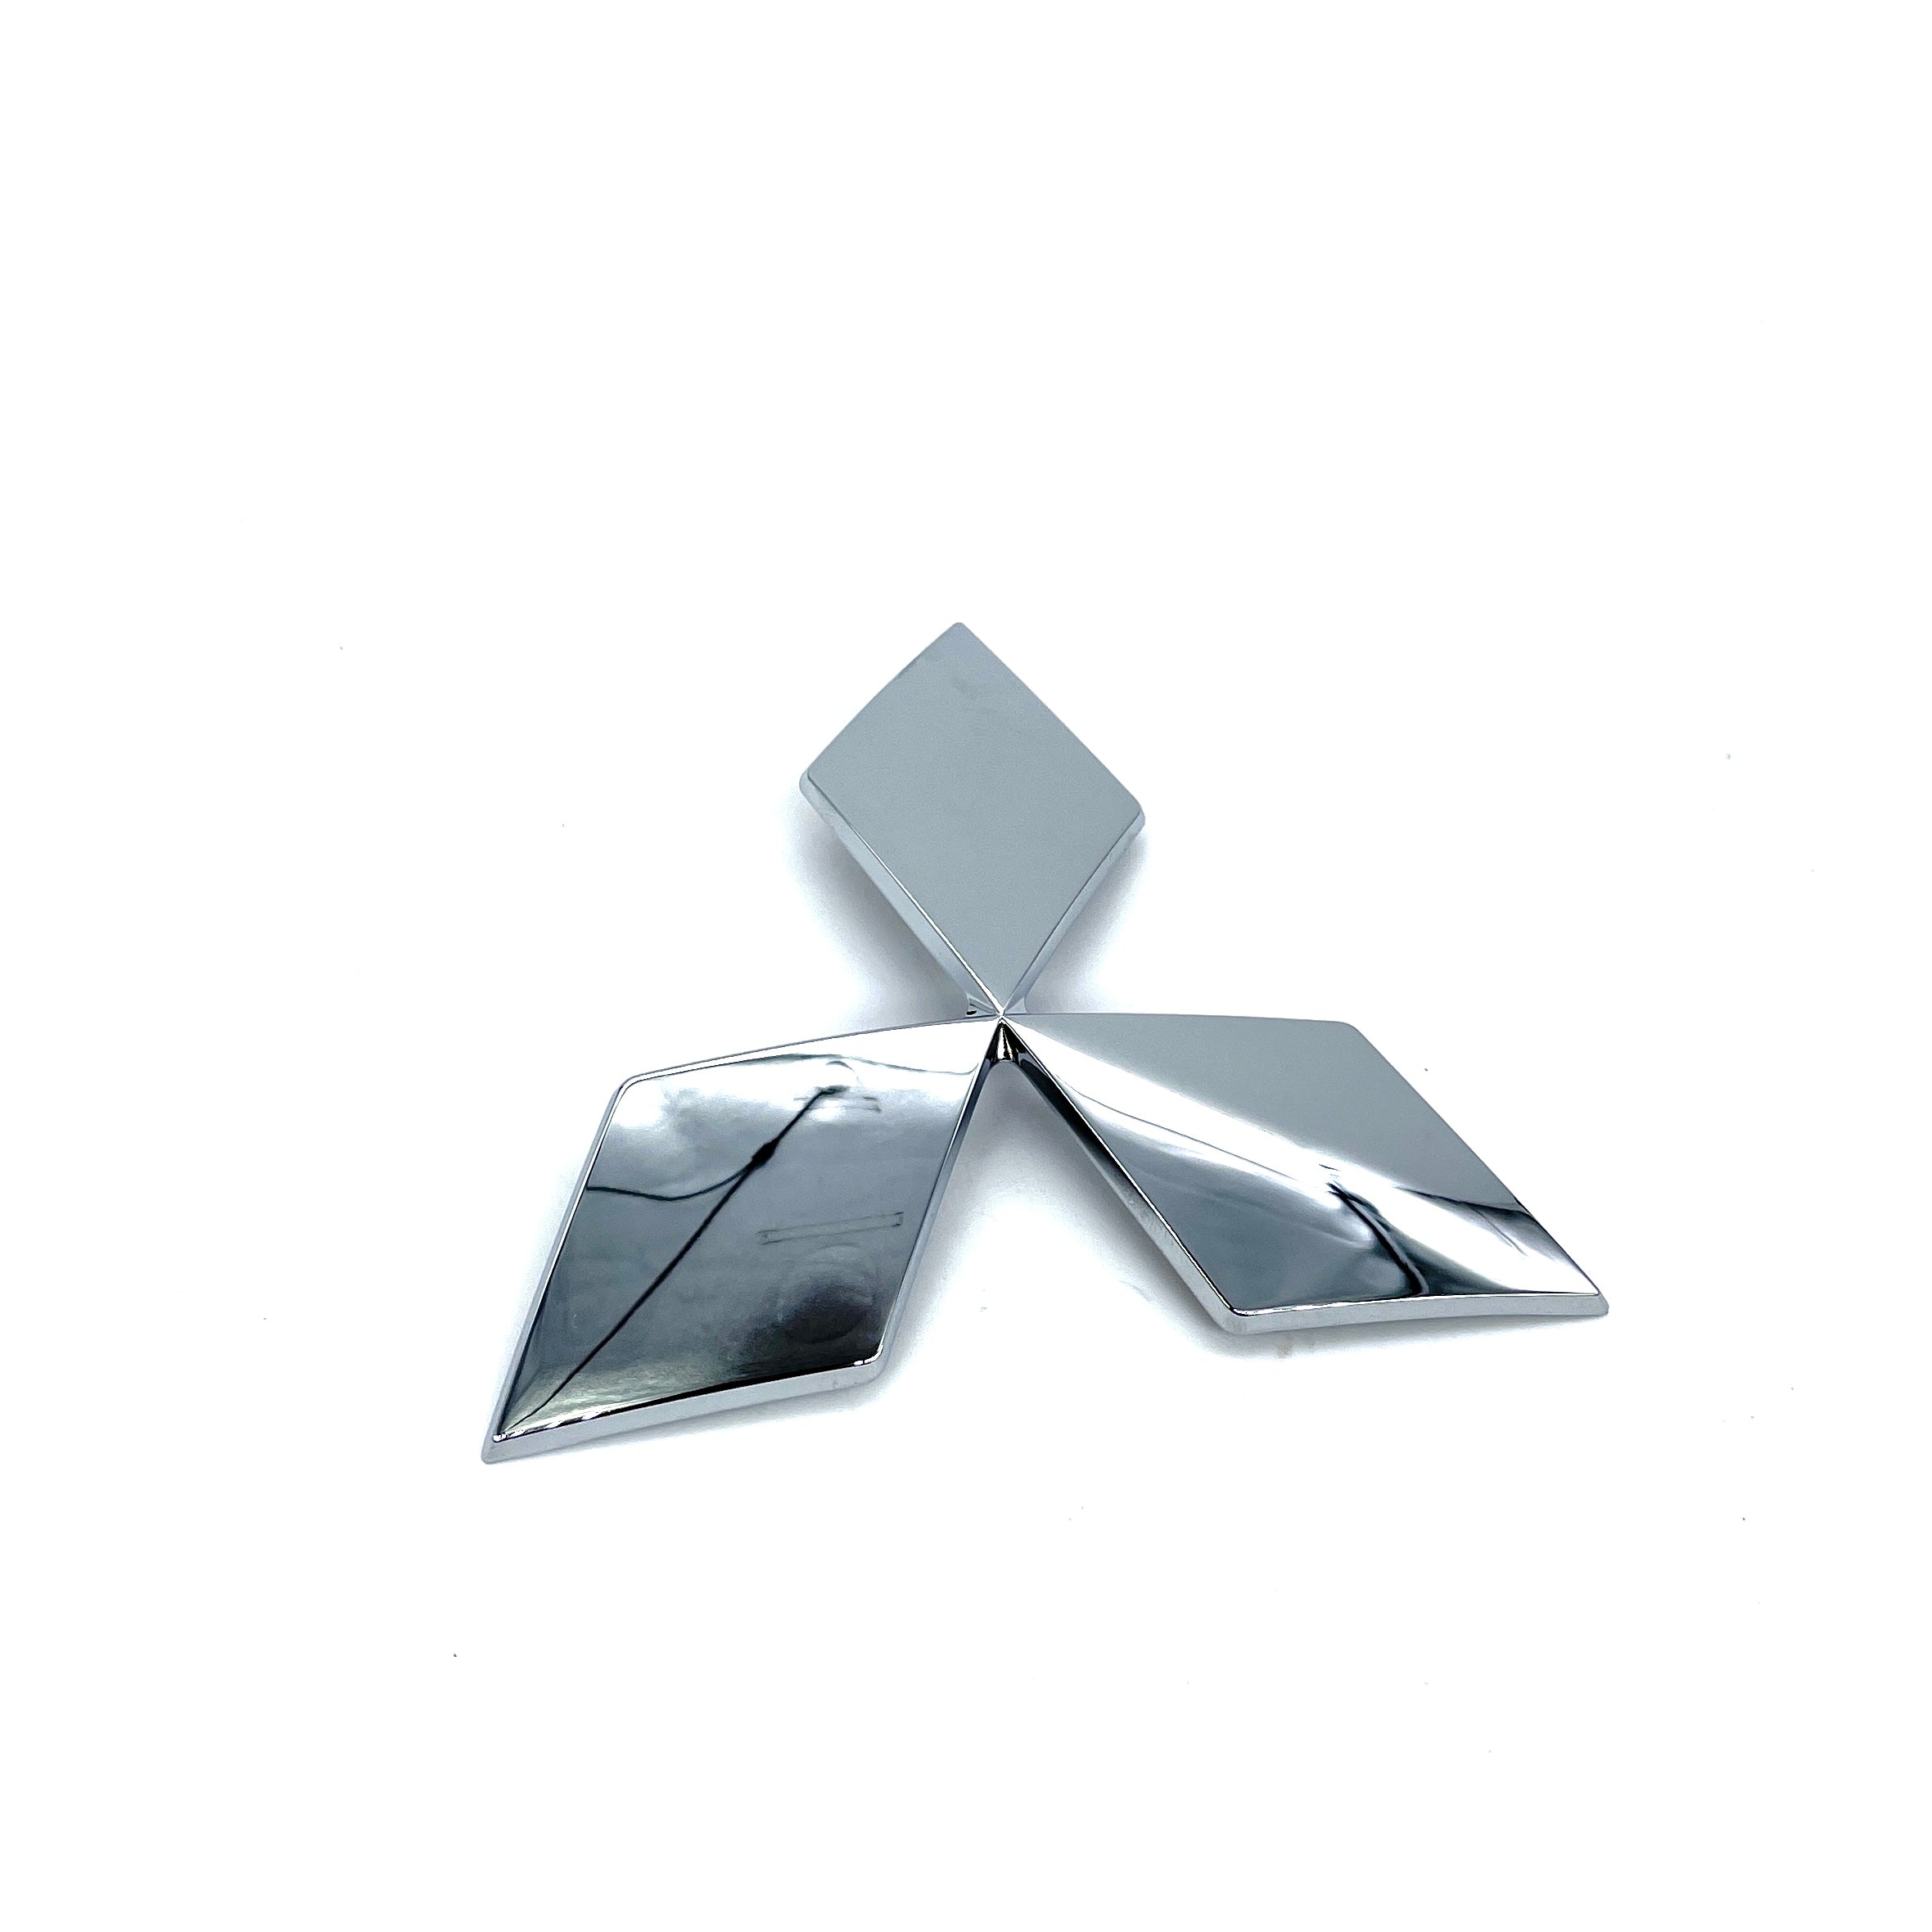 Emblema de diamante para parachoques delantero OEM Mitsubishi (Evo 8)